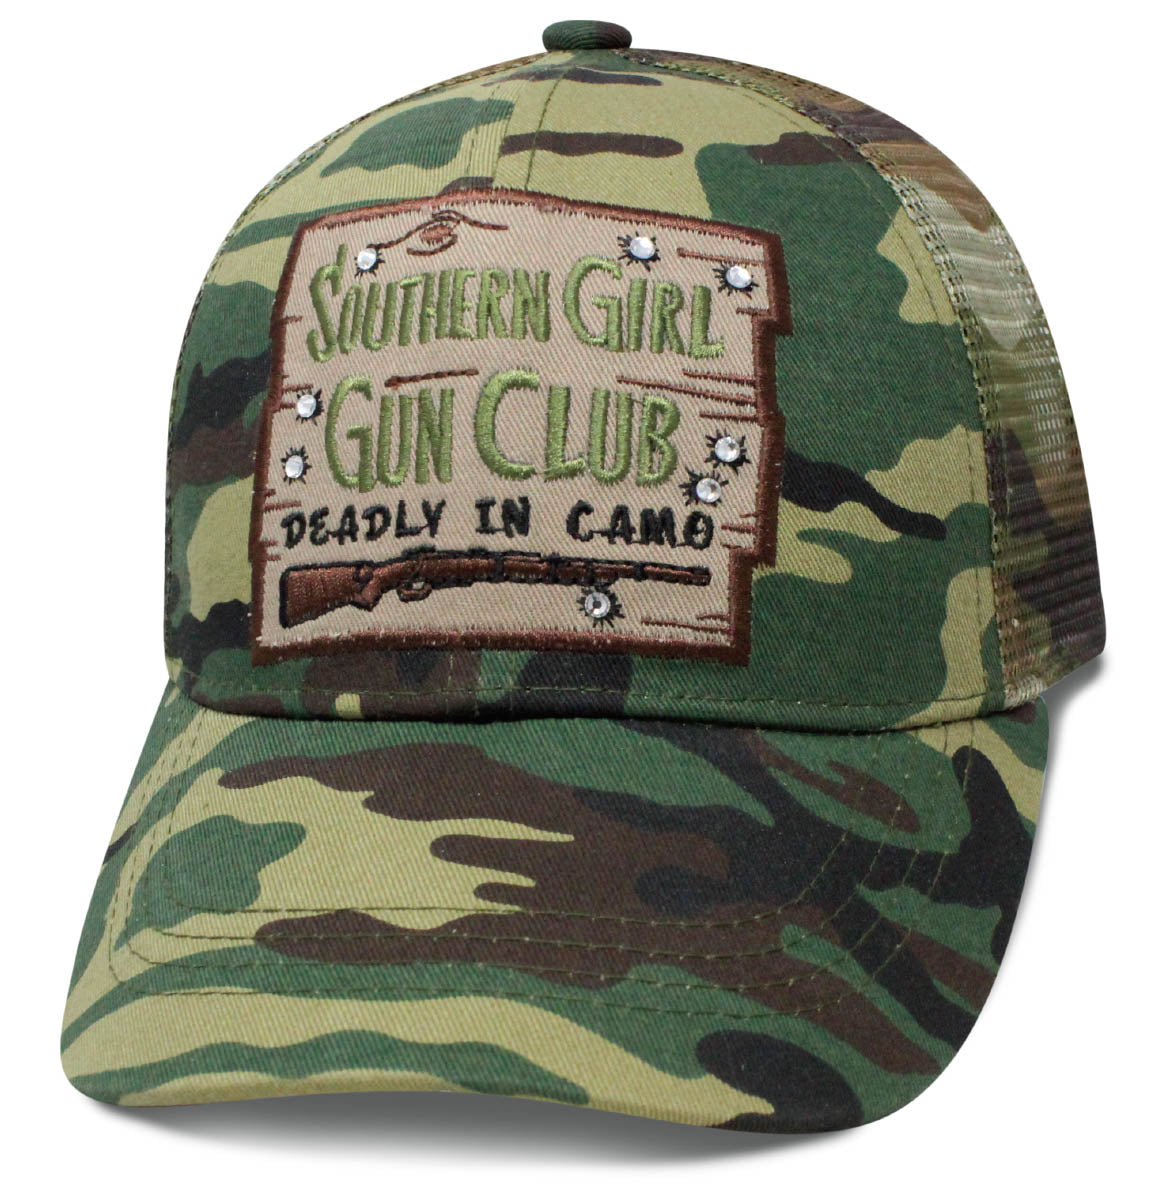 Southern Girl Gun Club